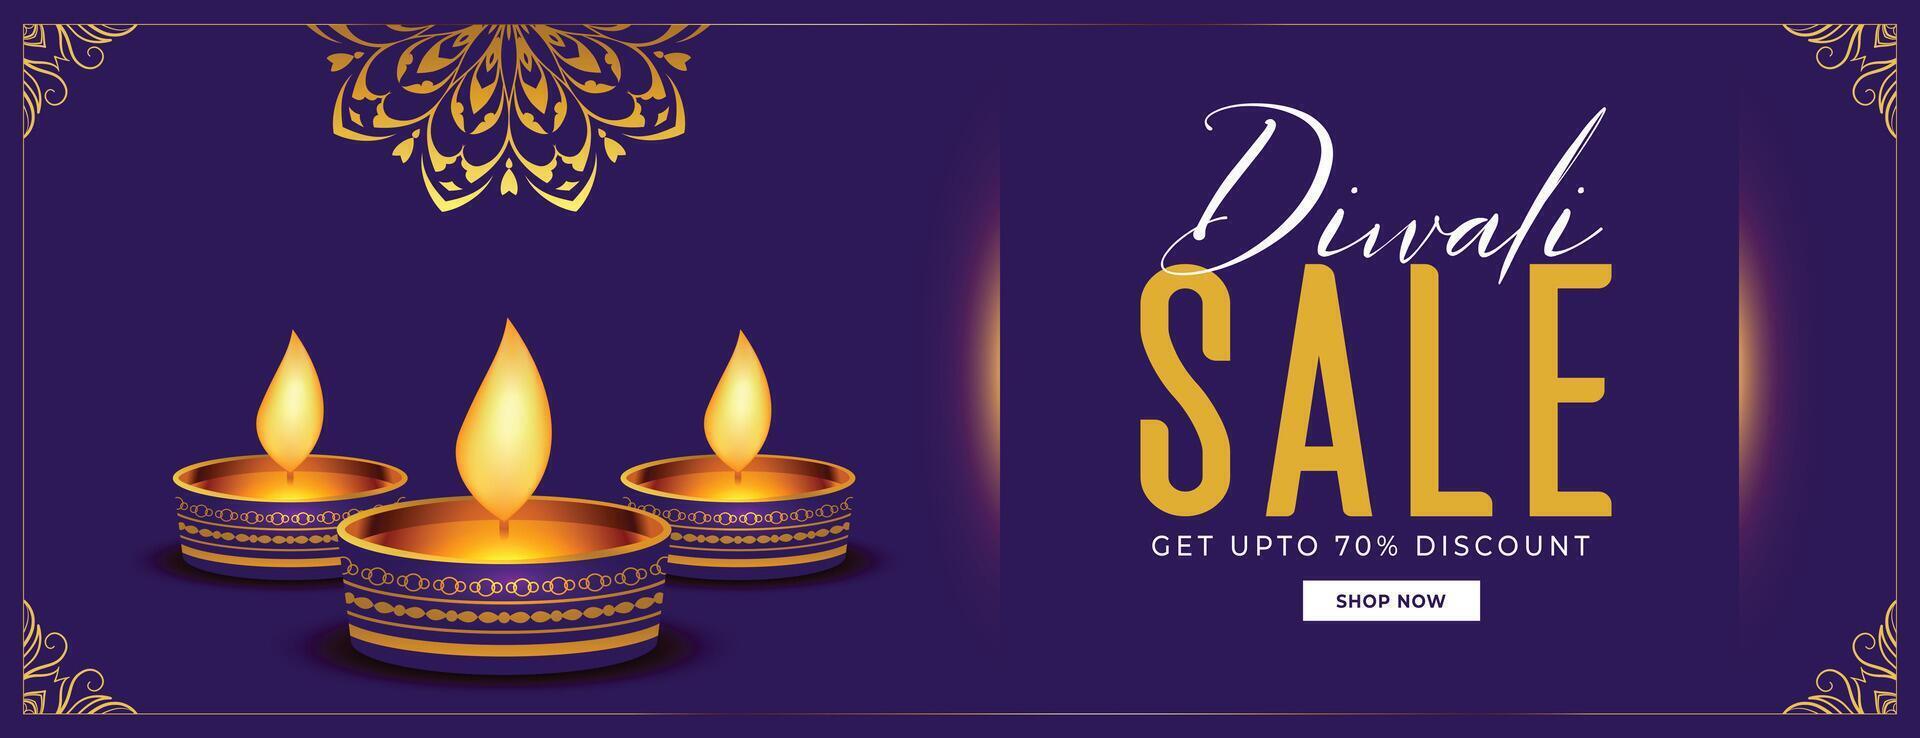 premium happy diwali sale banner with golden diya in purple background vector